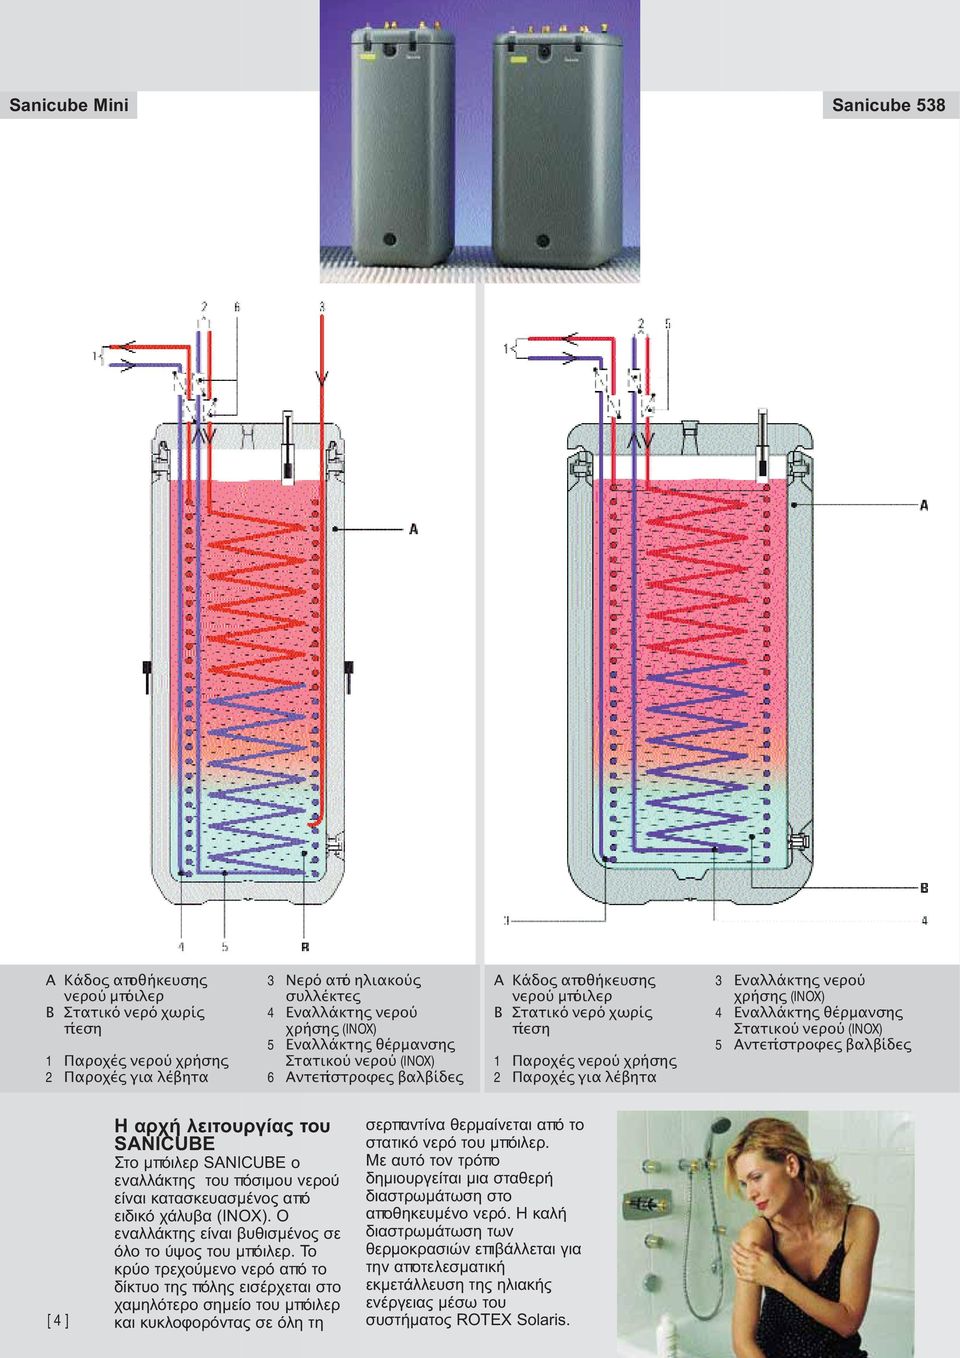 (INOX) 4 Εναλλάκτης θέρµανσης Στατικού νερού (INOX) 5 Αντεϖίστροφες βαλβίδες [ 4 ] Η αρχή λειτουργίας του SANICUBE Στο μπόιλερ SANICUBE ο εναλλάκτης του πόσιμου νερού είναι κατασκευασμένος από ειδικό